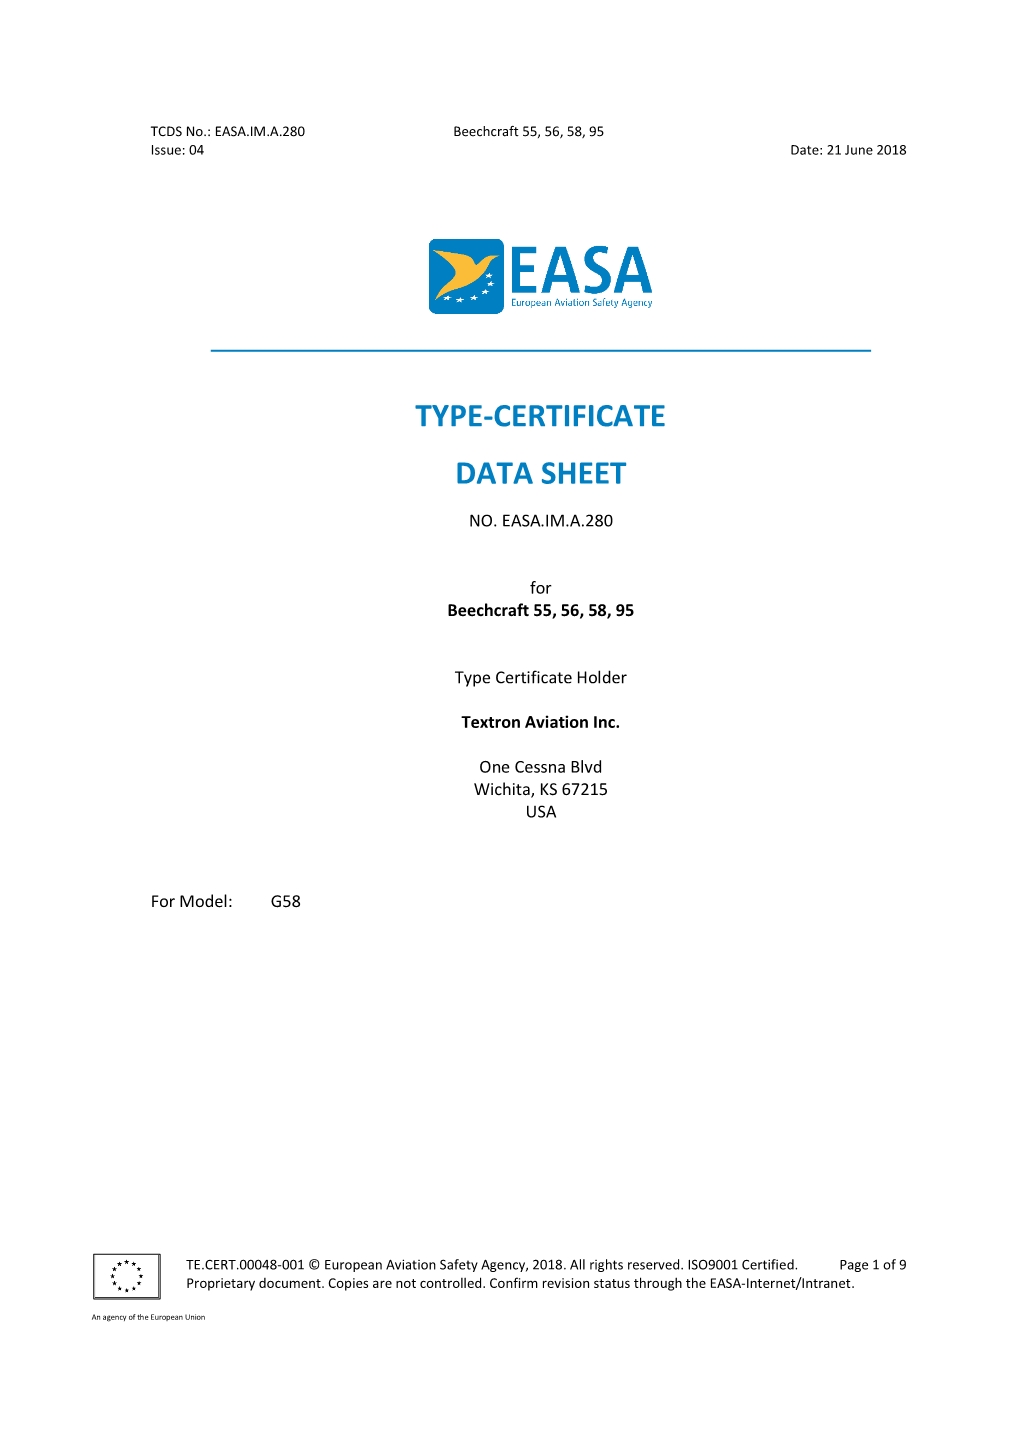 Type-Certificate Data Sheet